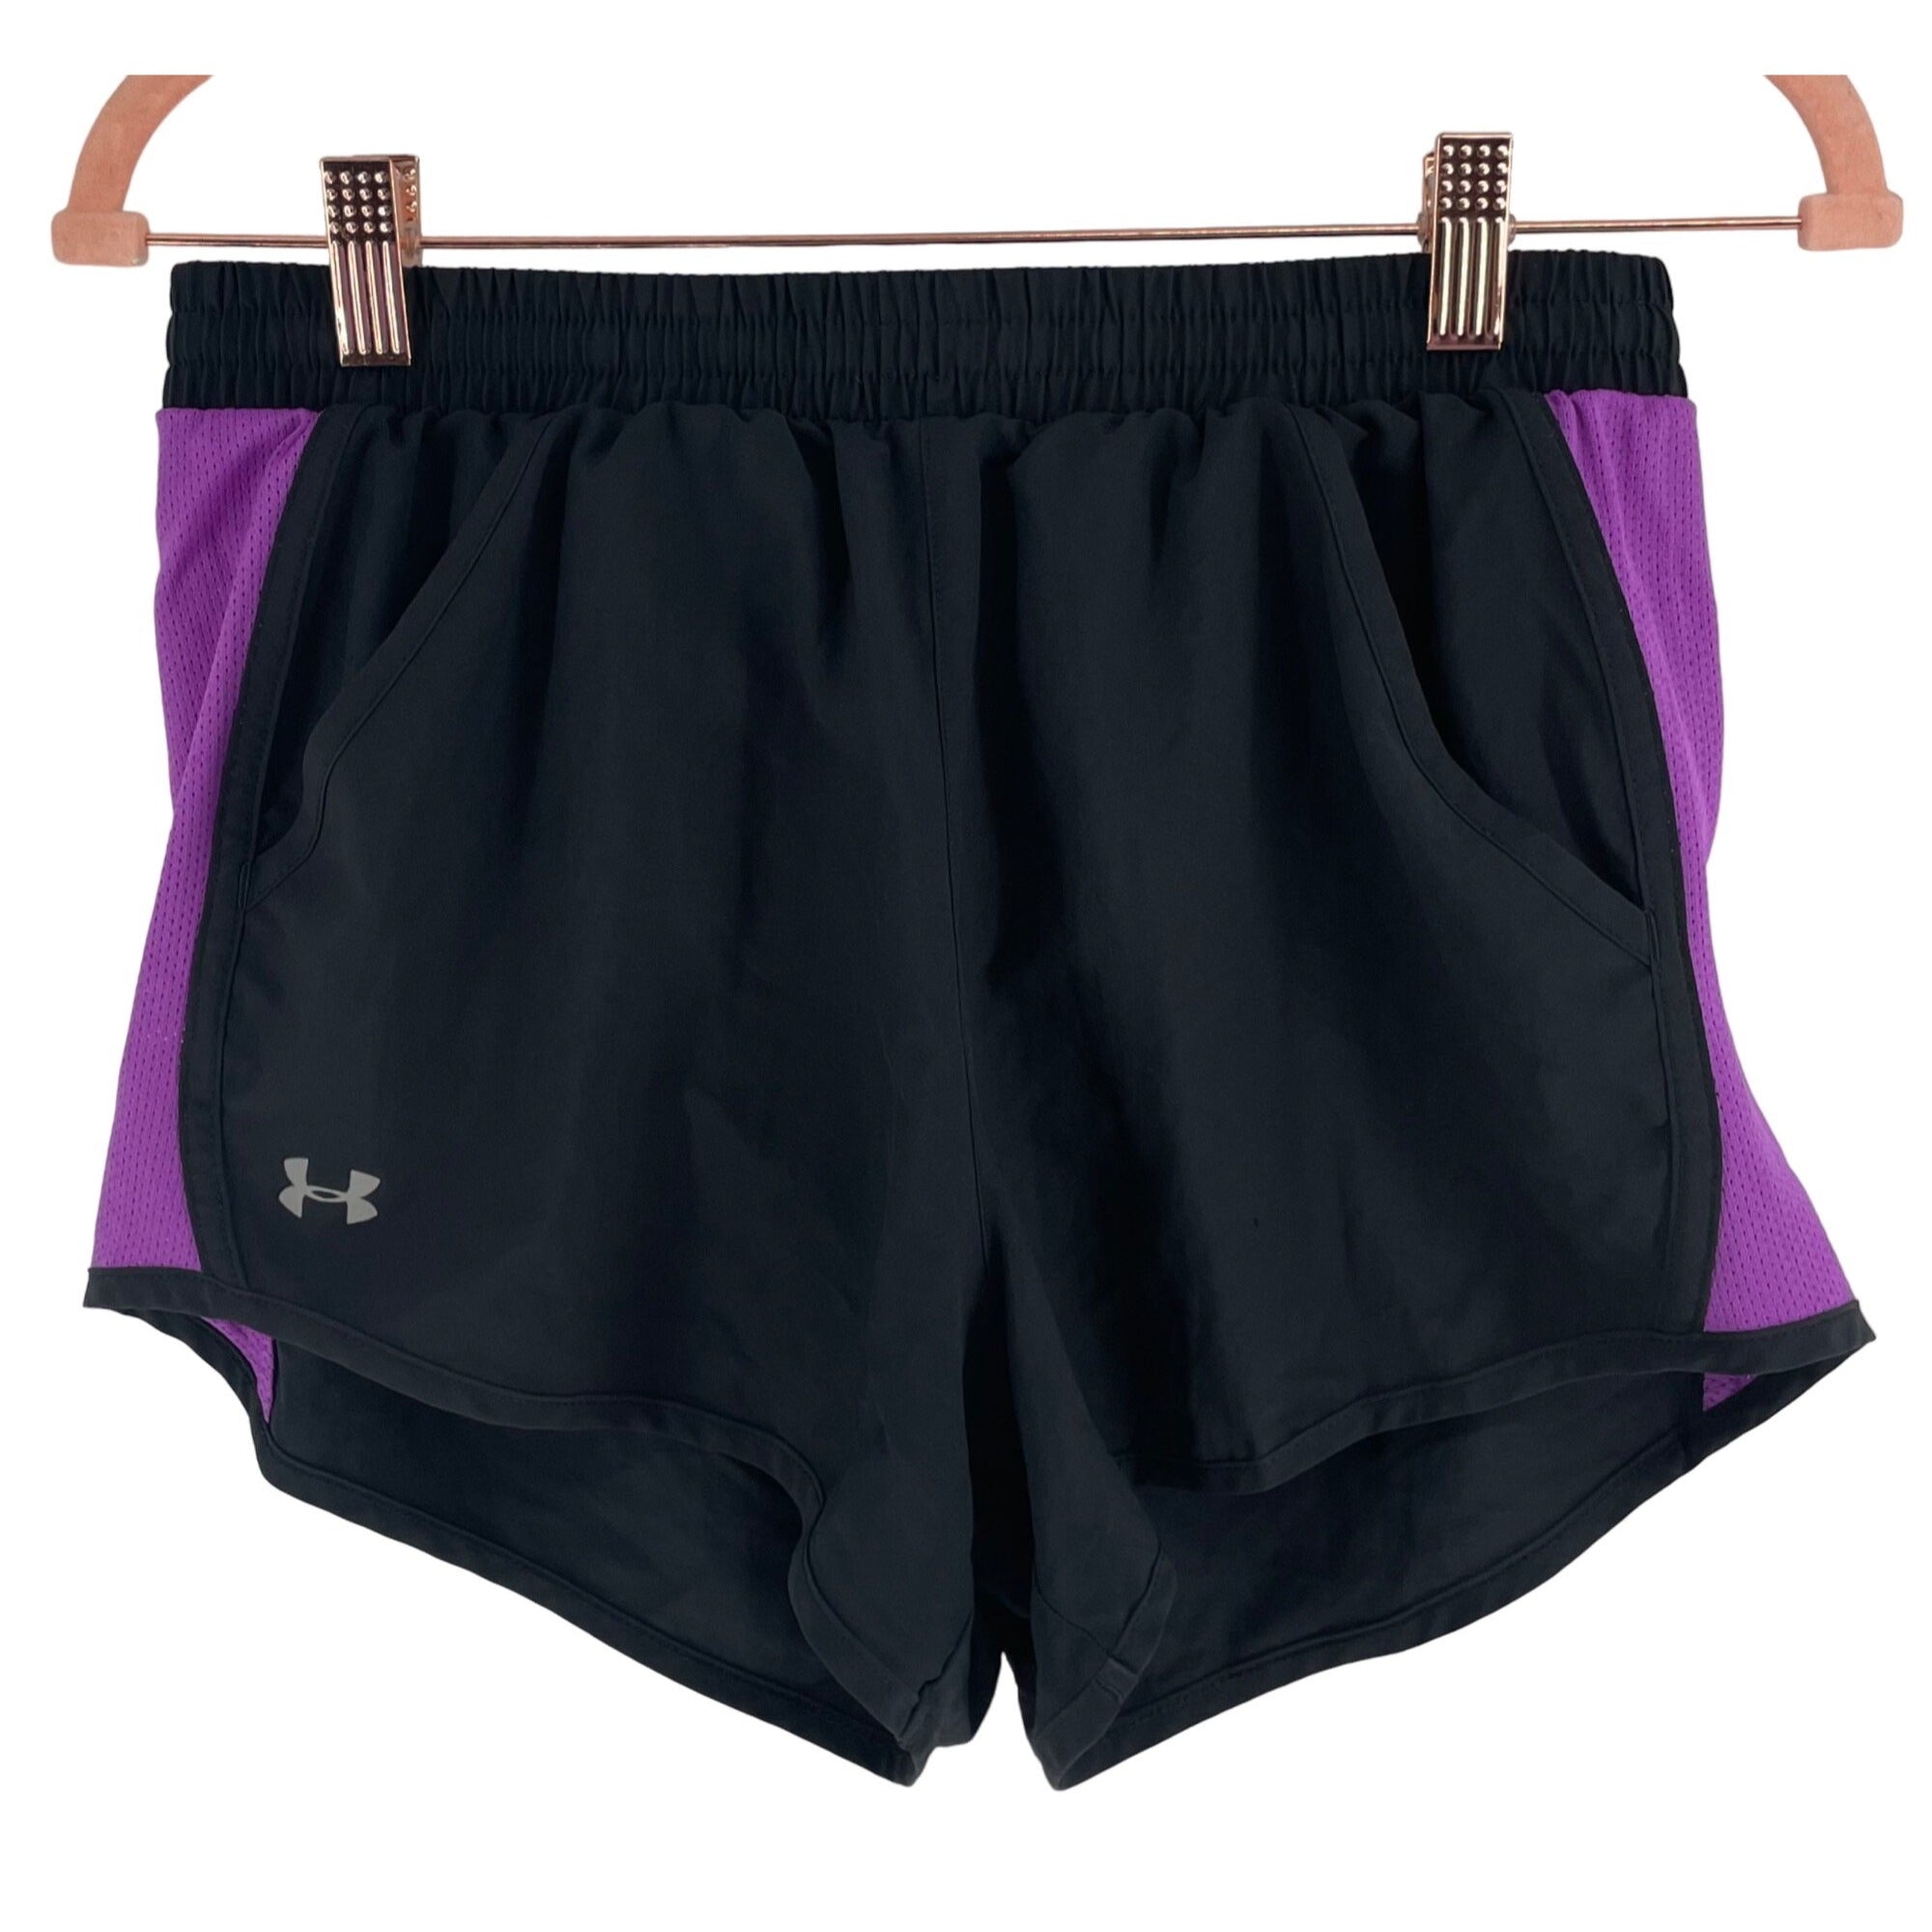 Under Armour Women's Size Small Petite Black & Purple Exercise Shorts W/ Drawstring